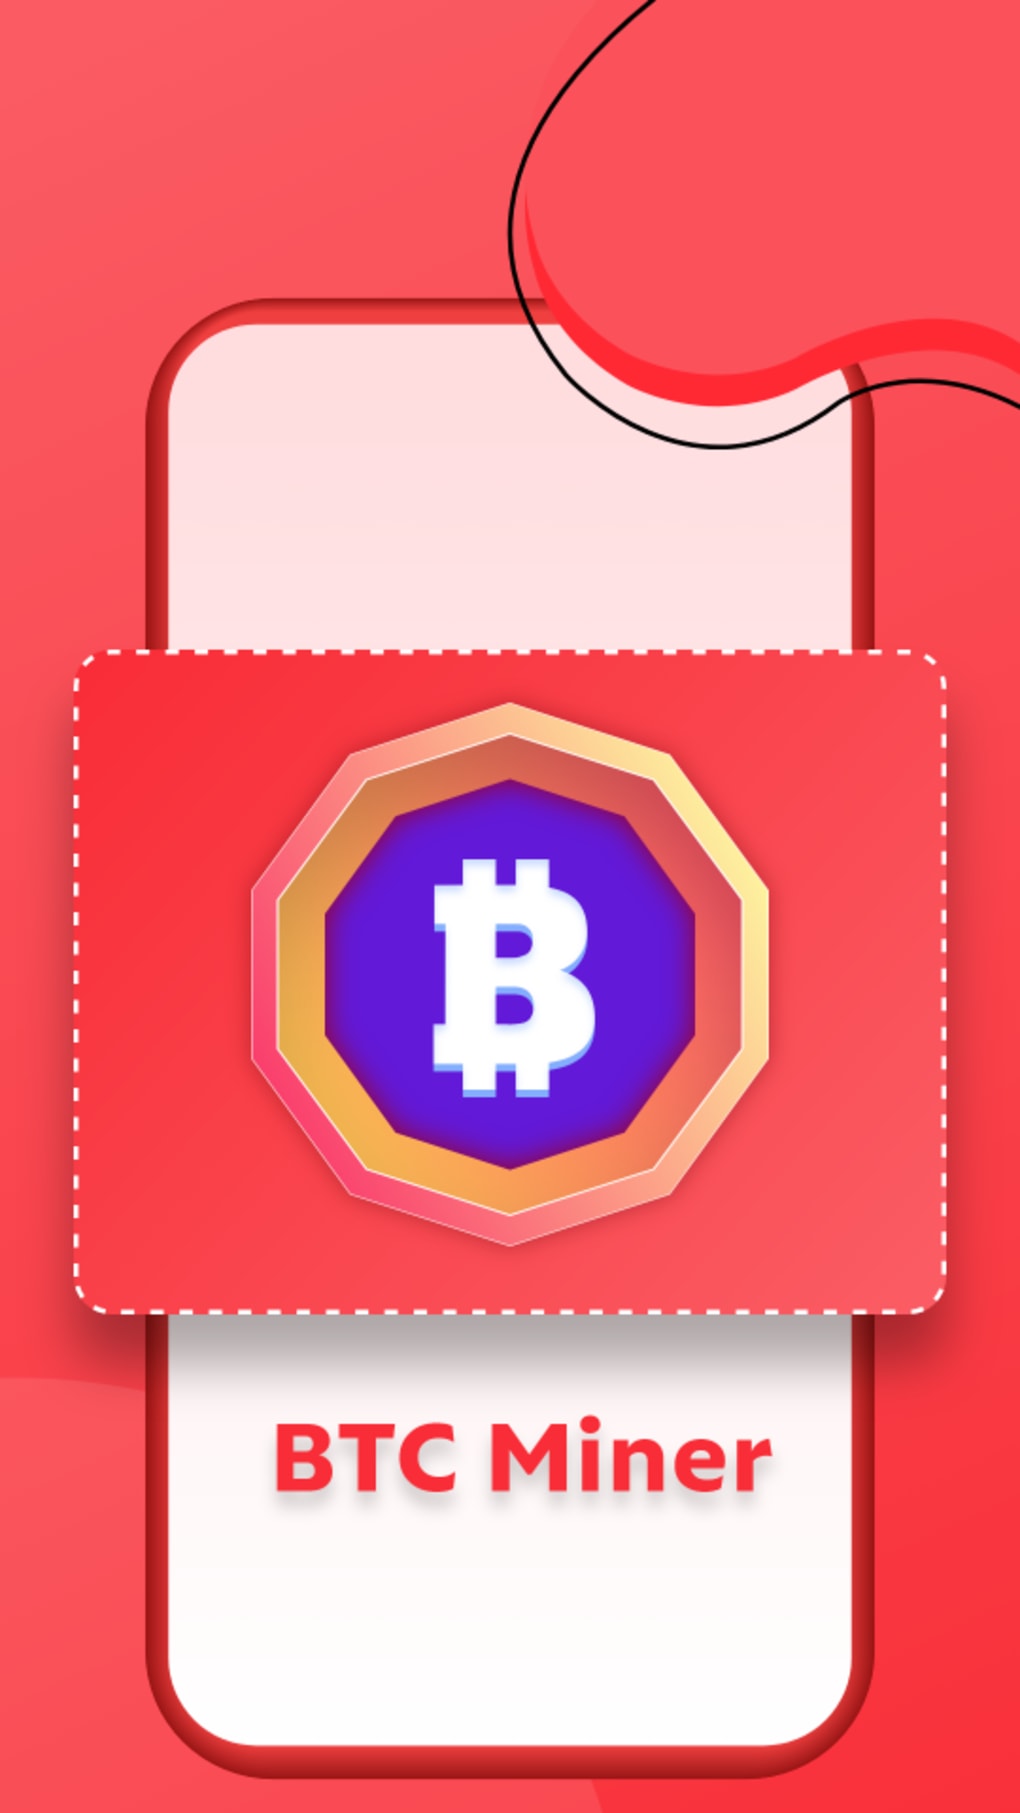 BTC Mining - Bitcoin Miner APK (Android App) - Free Download